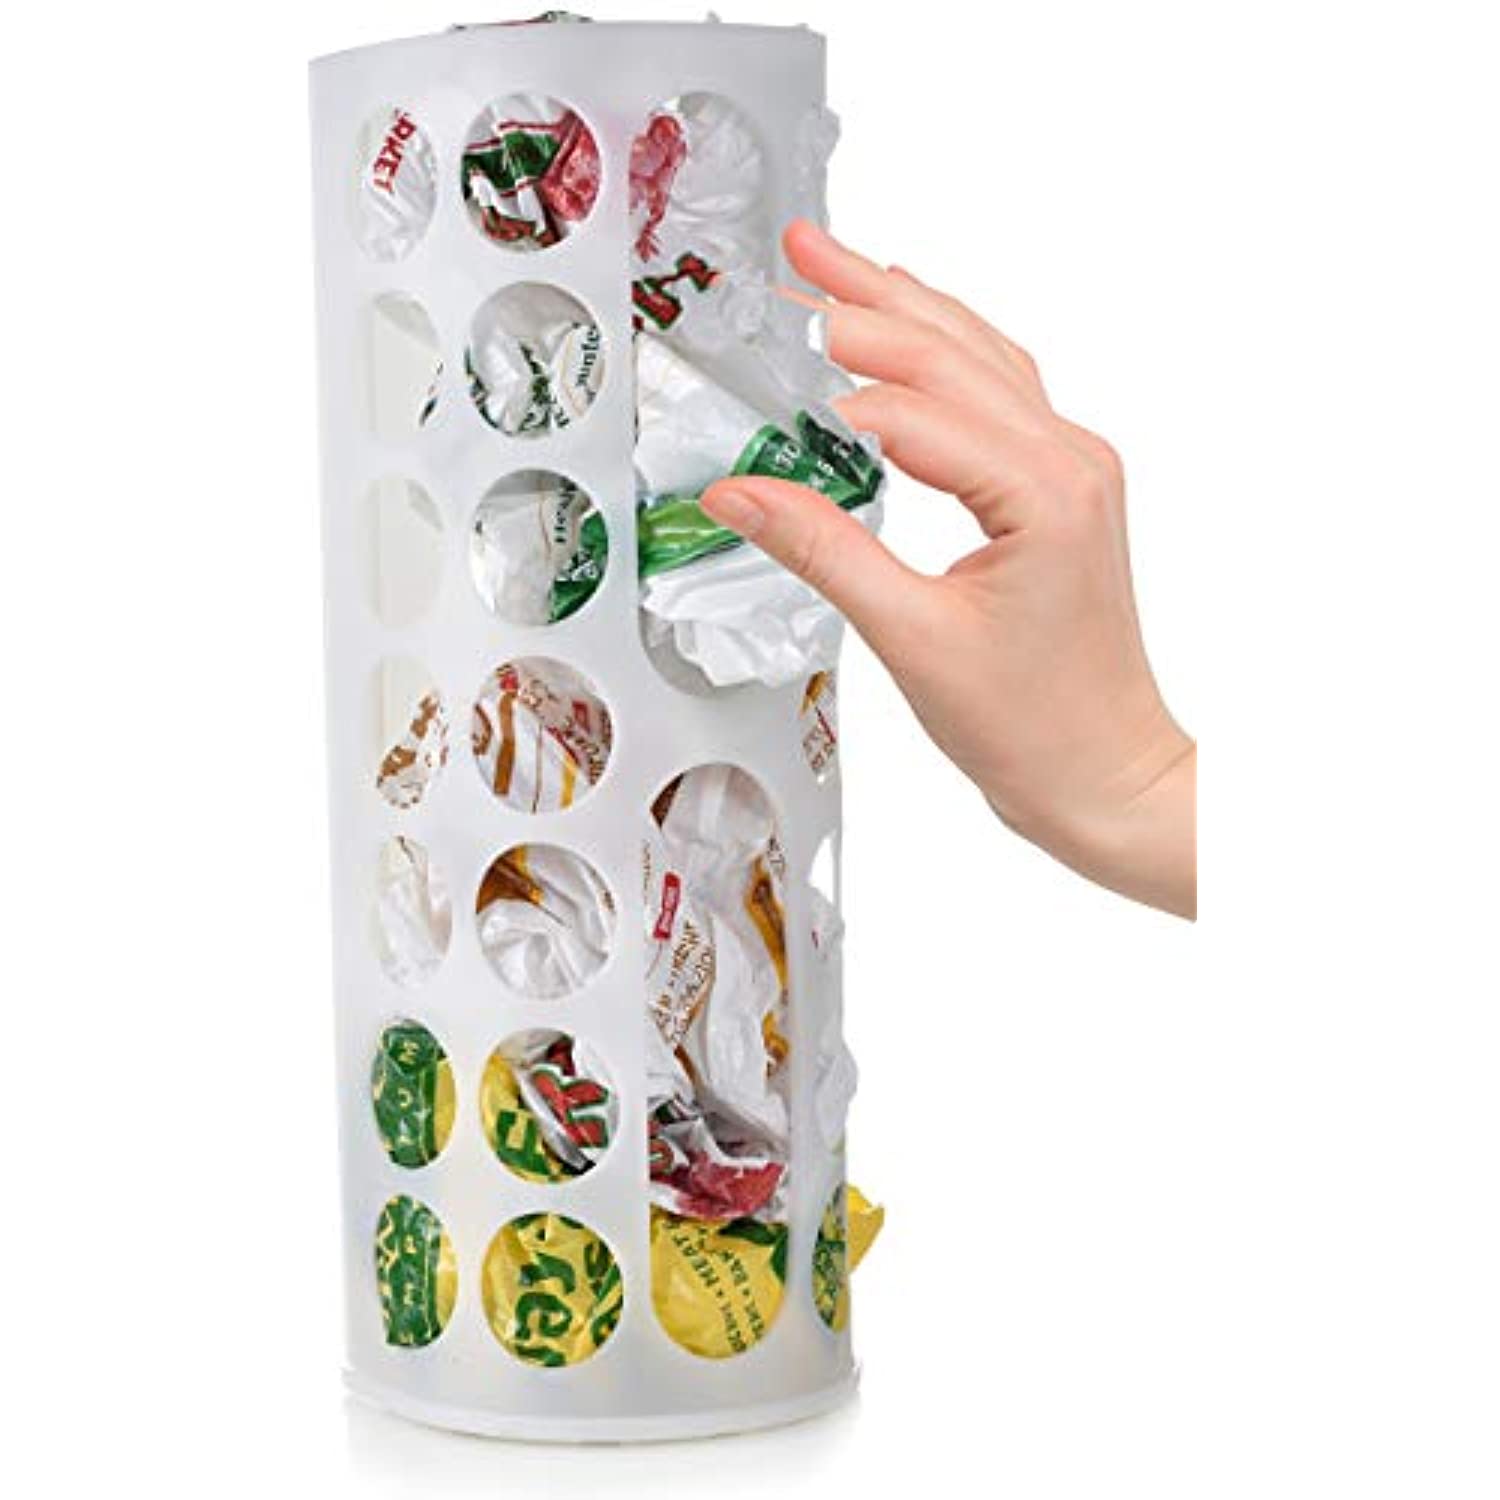 Installing An Ikea Variera Plastic Bag Dispenser-Tutorial - YouTube